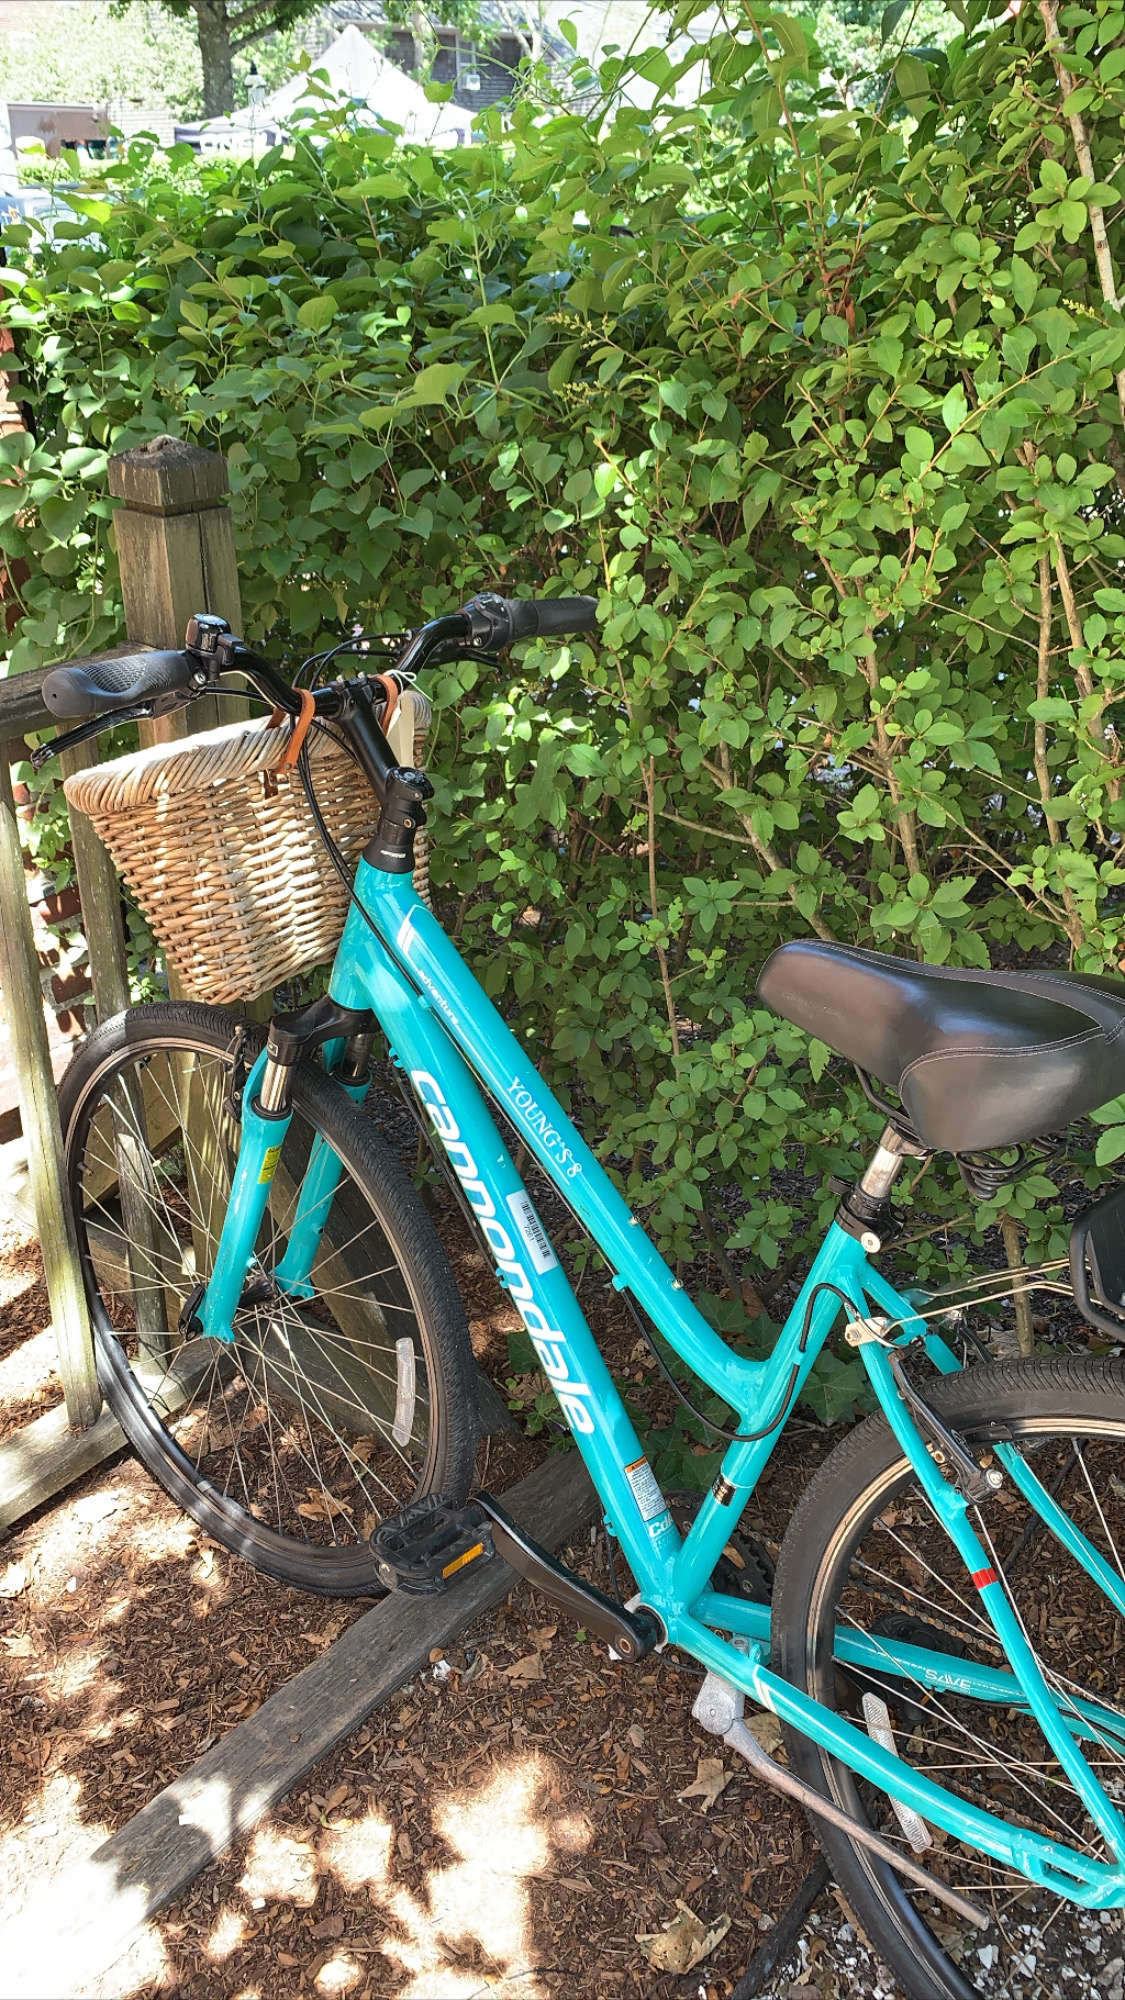 Young's Bike Shop Bike Rental with Basket 